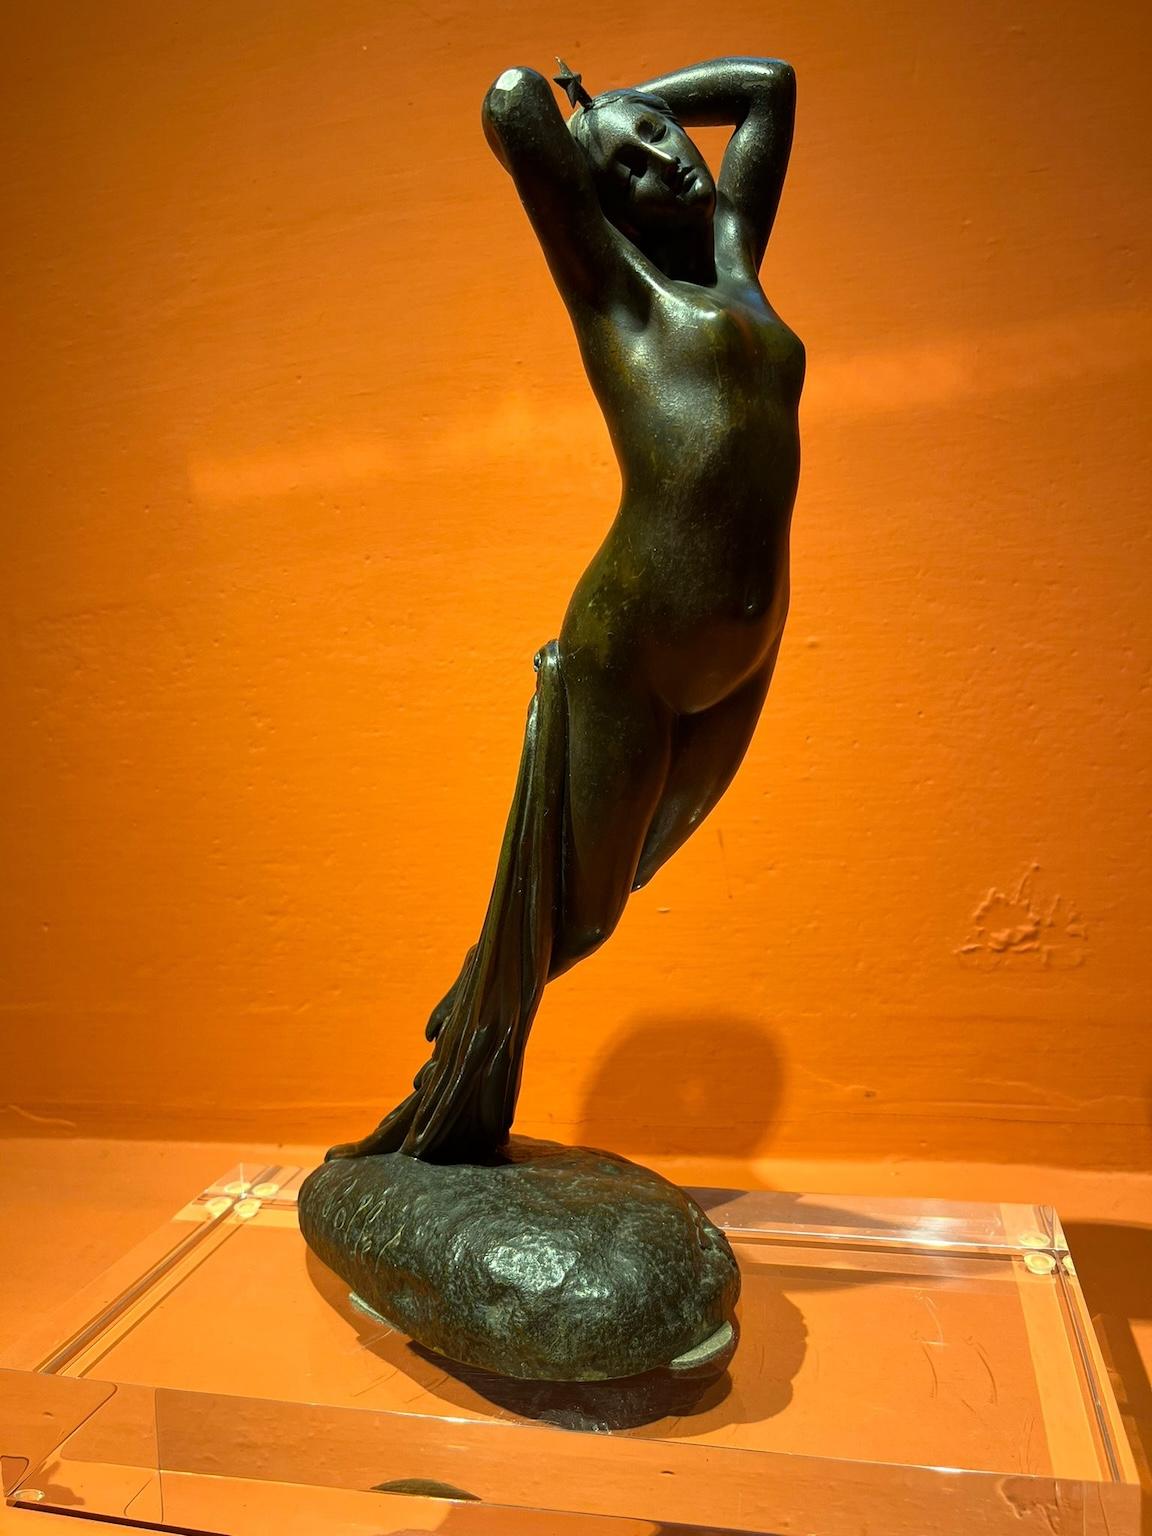 19th century French mythological figurative female bronze statuette - Art Nouveau Sculpture by Joseph Pollet